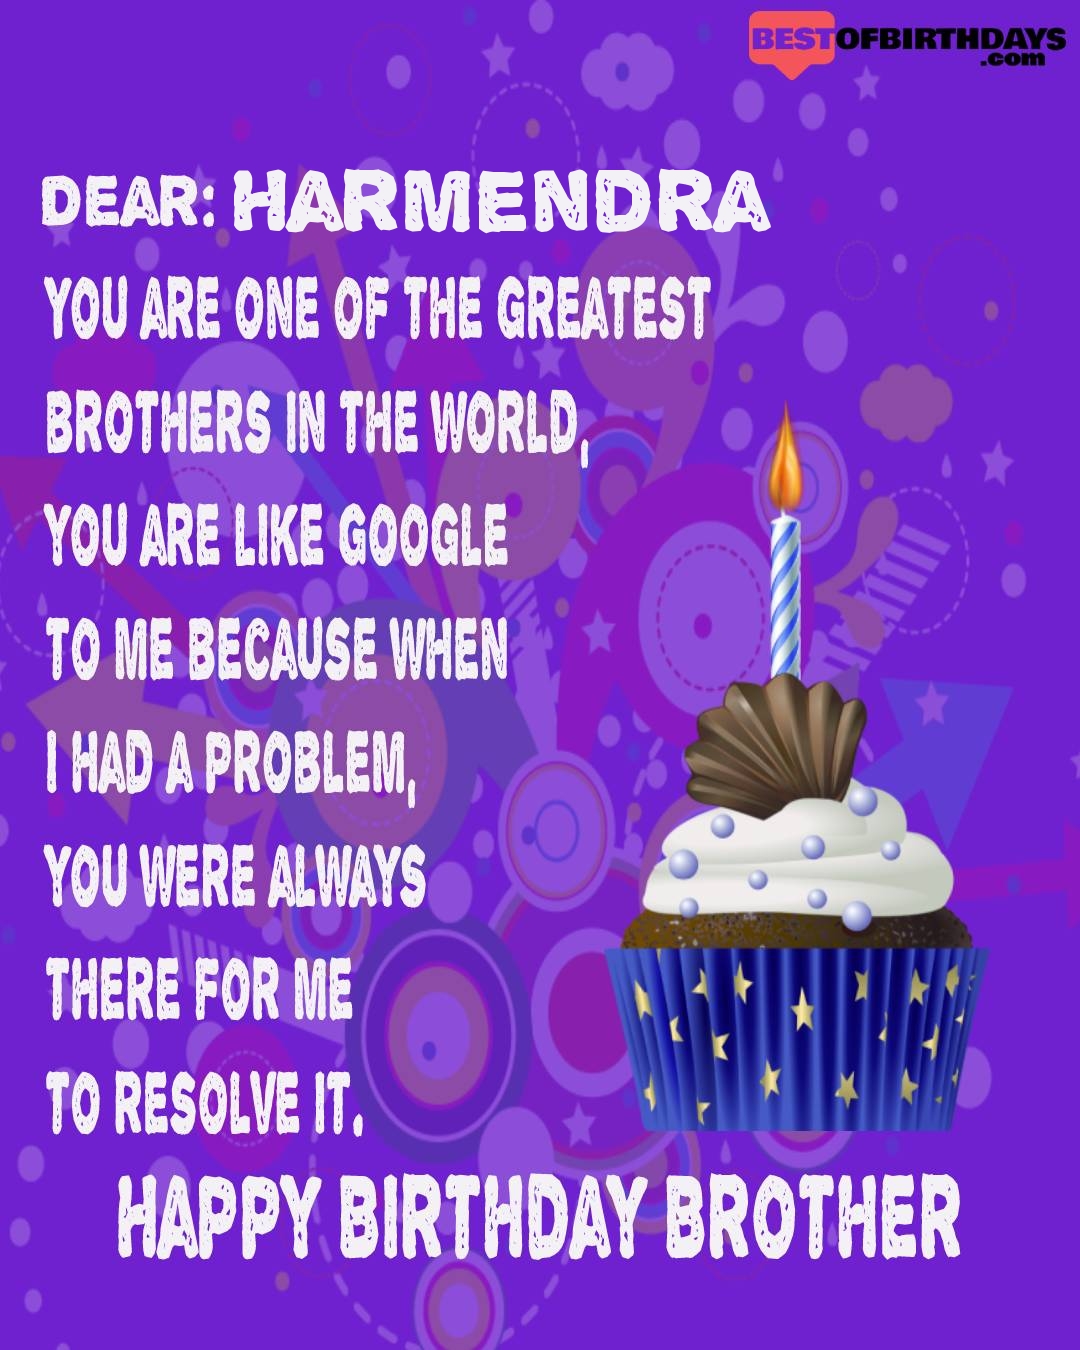 Happy birthday harmendra bhai brother bro